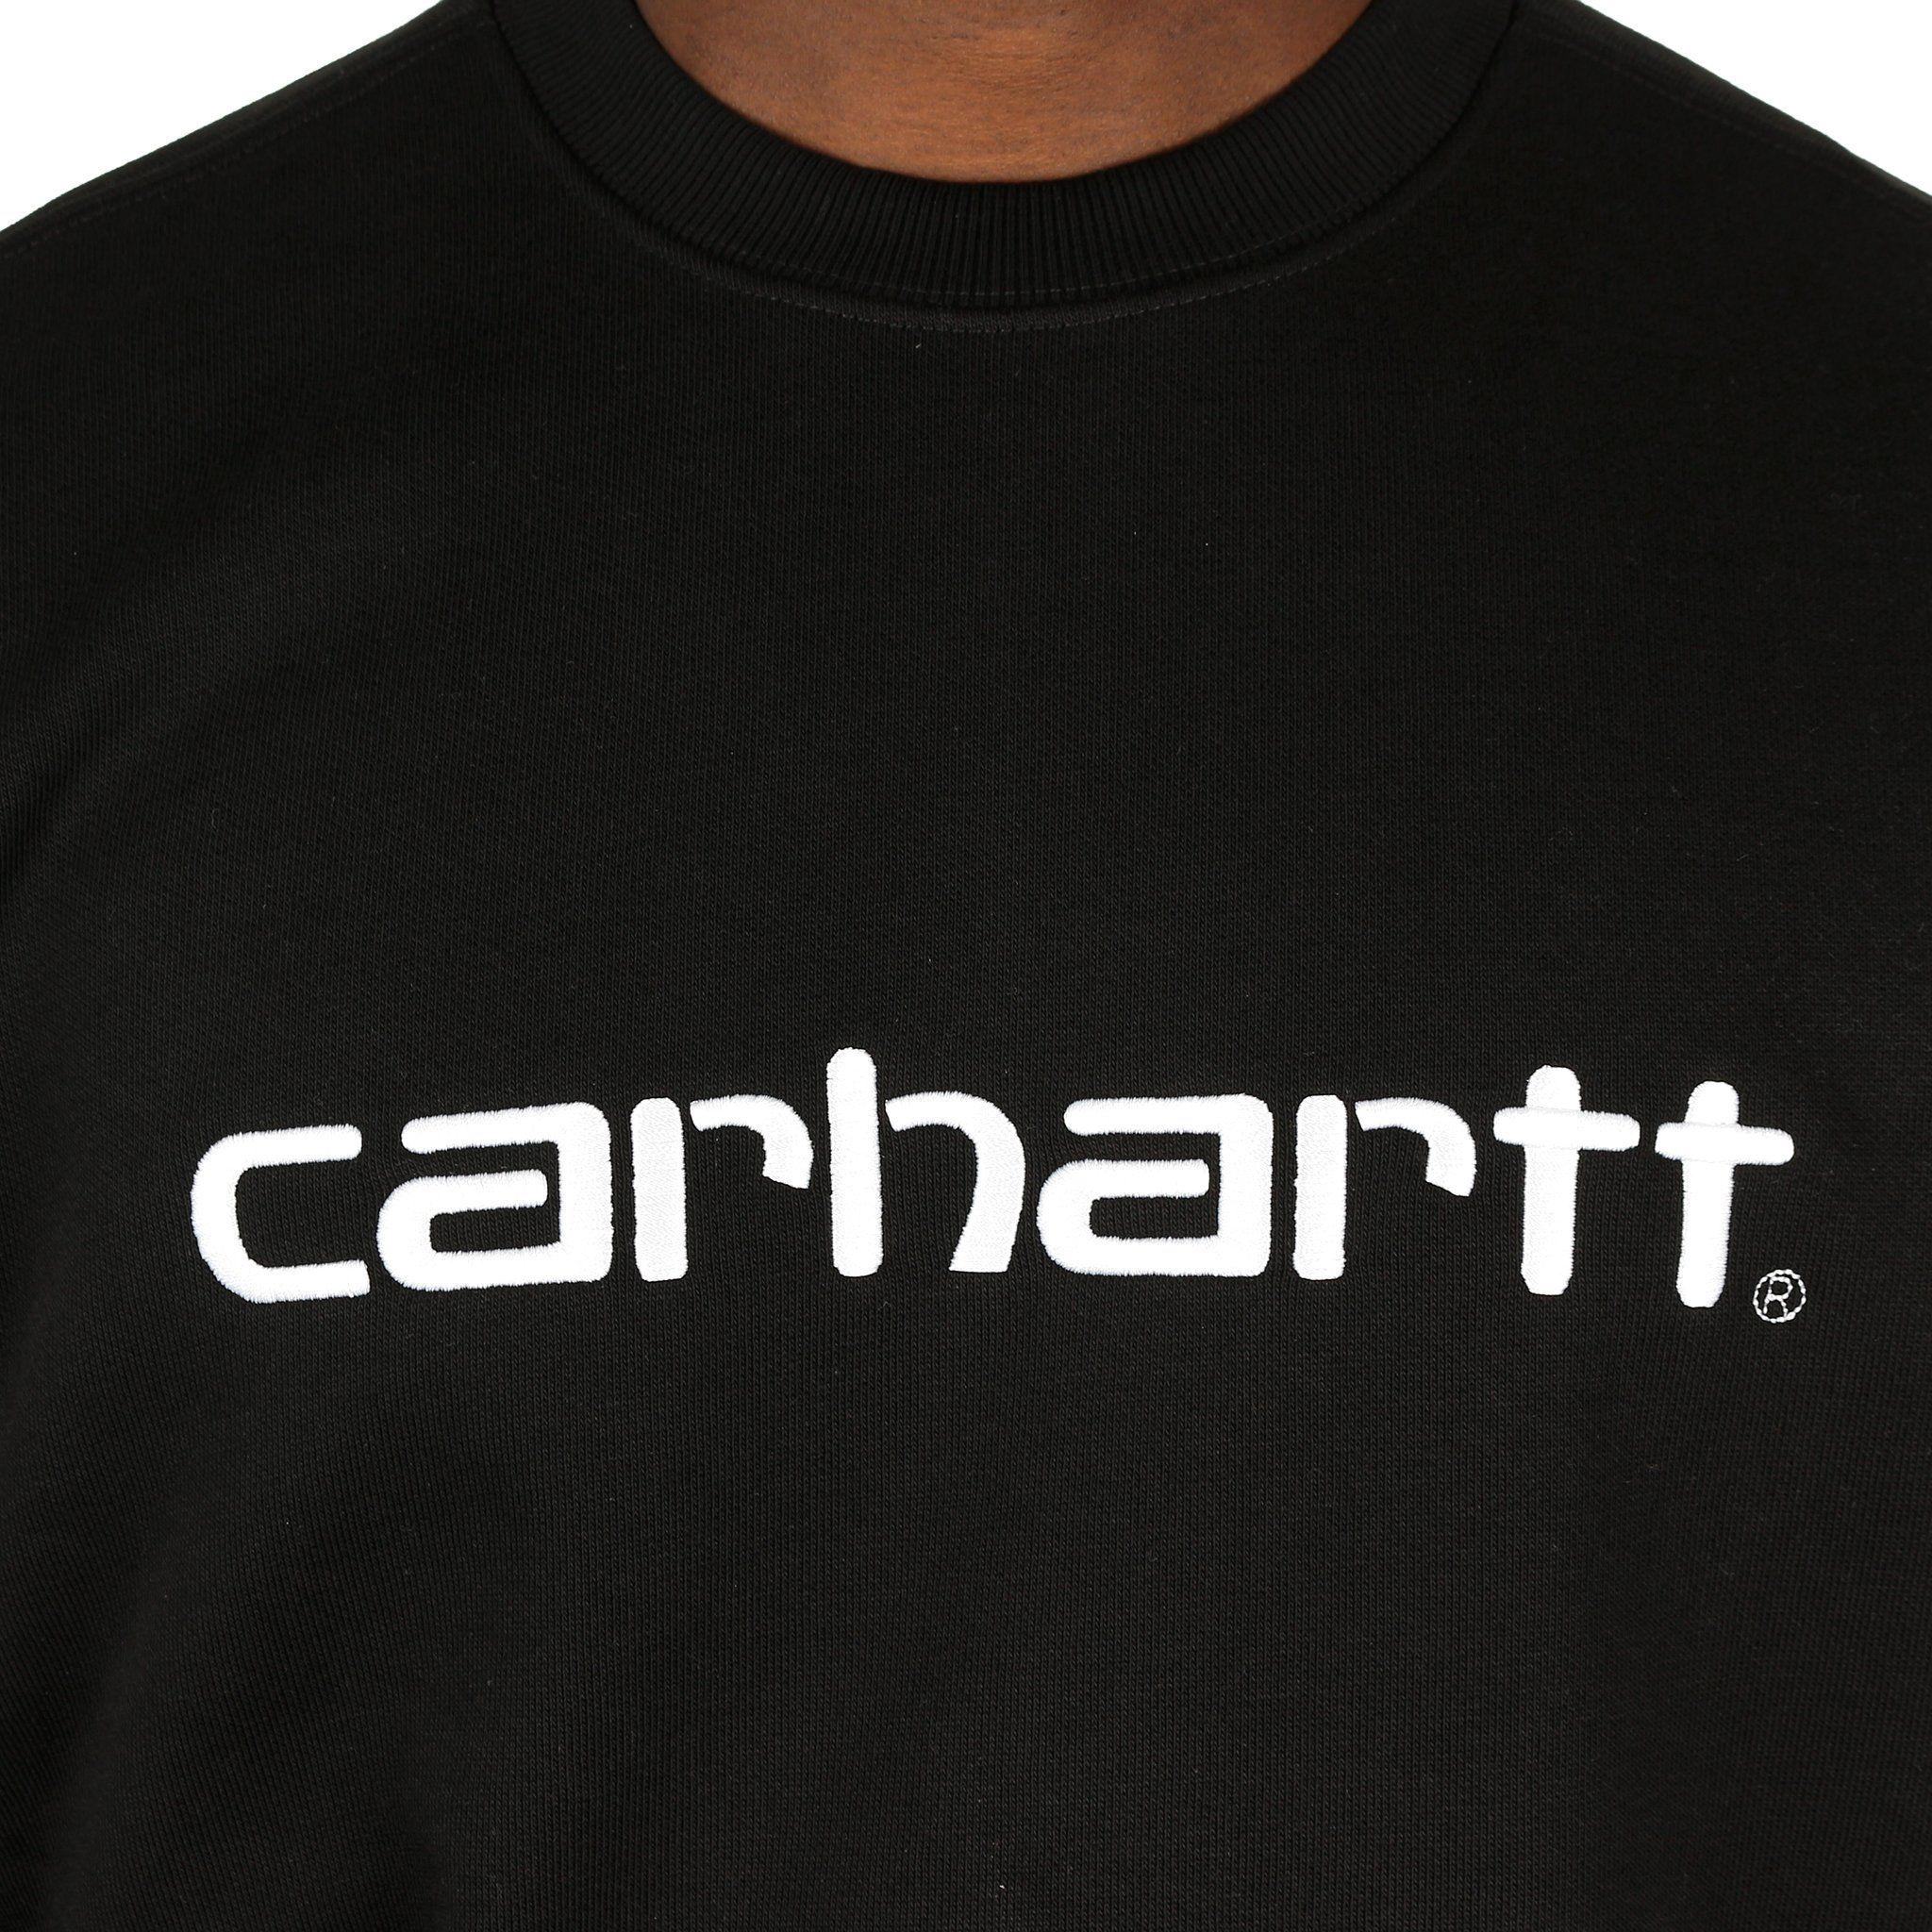 Carrhart Logo - Carhartt Logo Sweat - Black / White